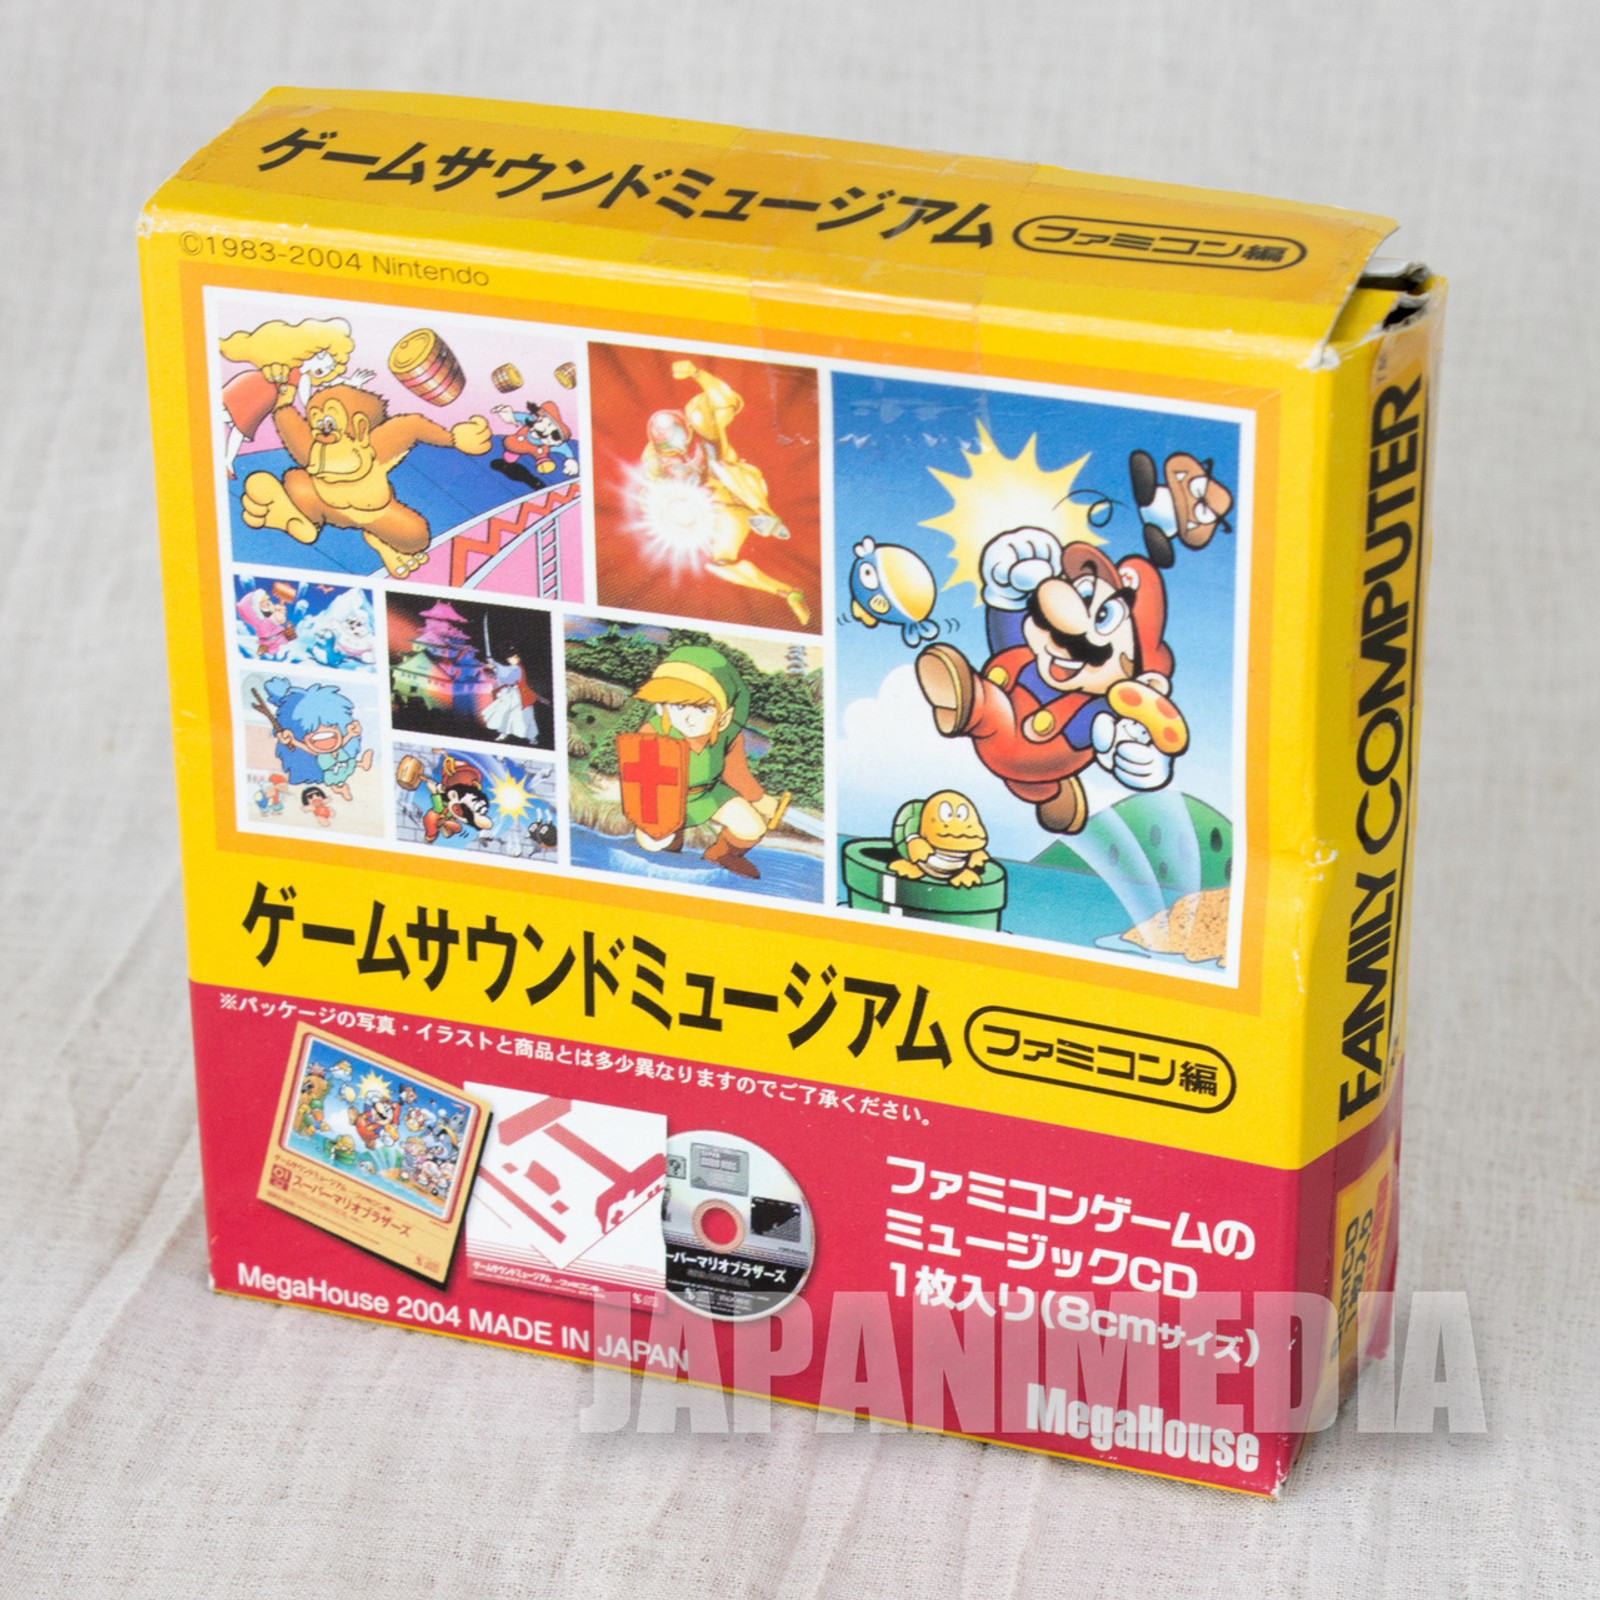 Sports Series Tennis Golf Game Sound Museum Nintendo Music 8cm CD JAPAN FAMICOM